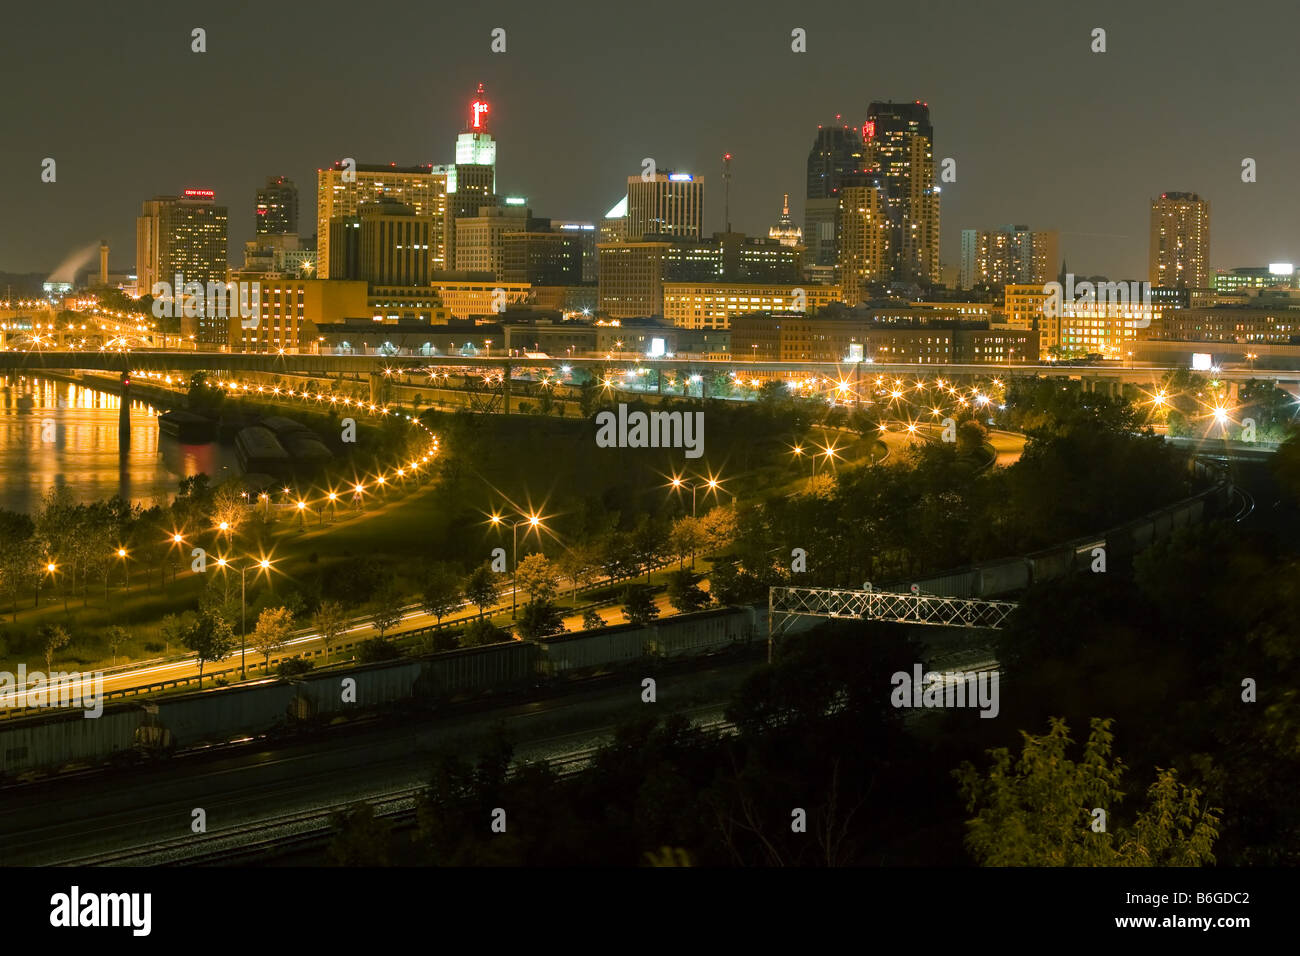 Download St Paul Minnesota At Night Wallpaper